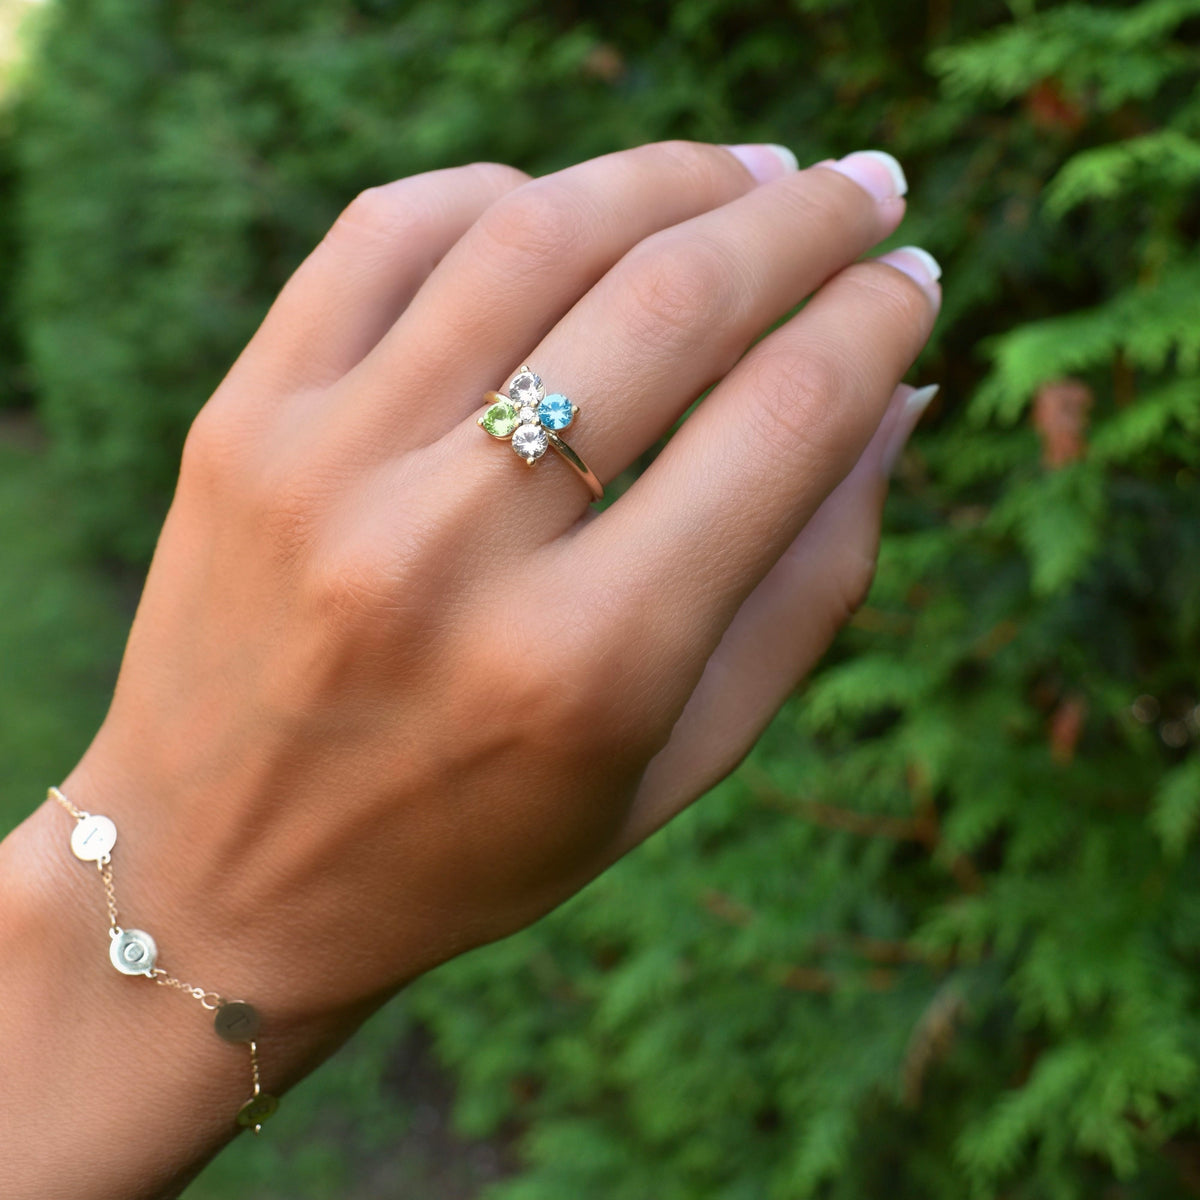 4-Stone Pear Ring – Shahla Karimi